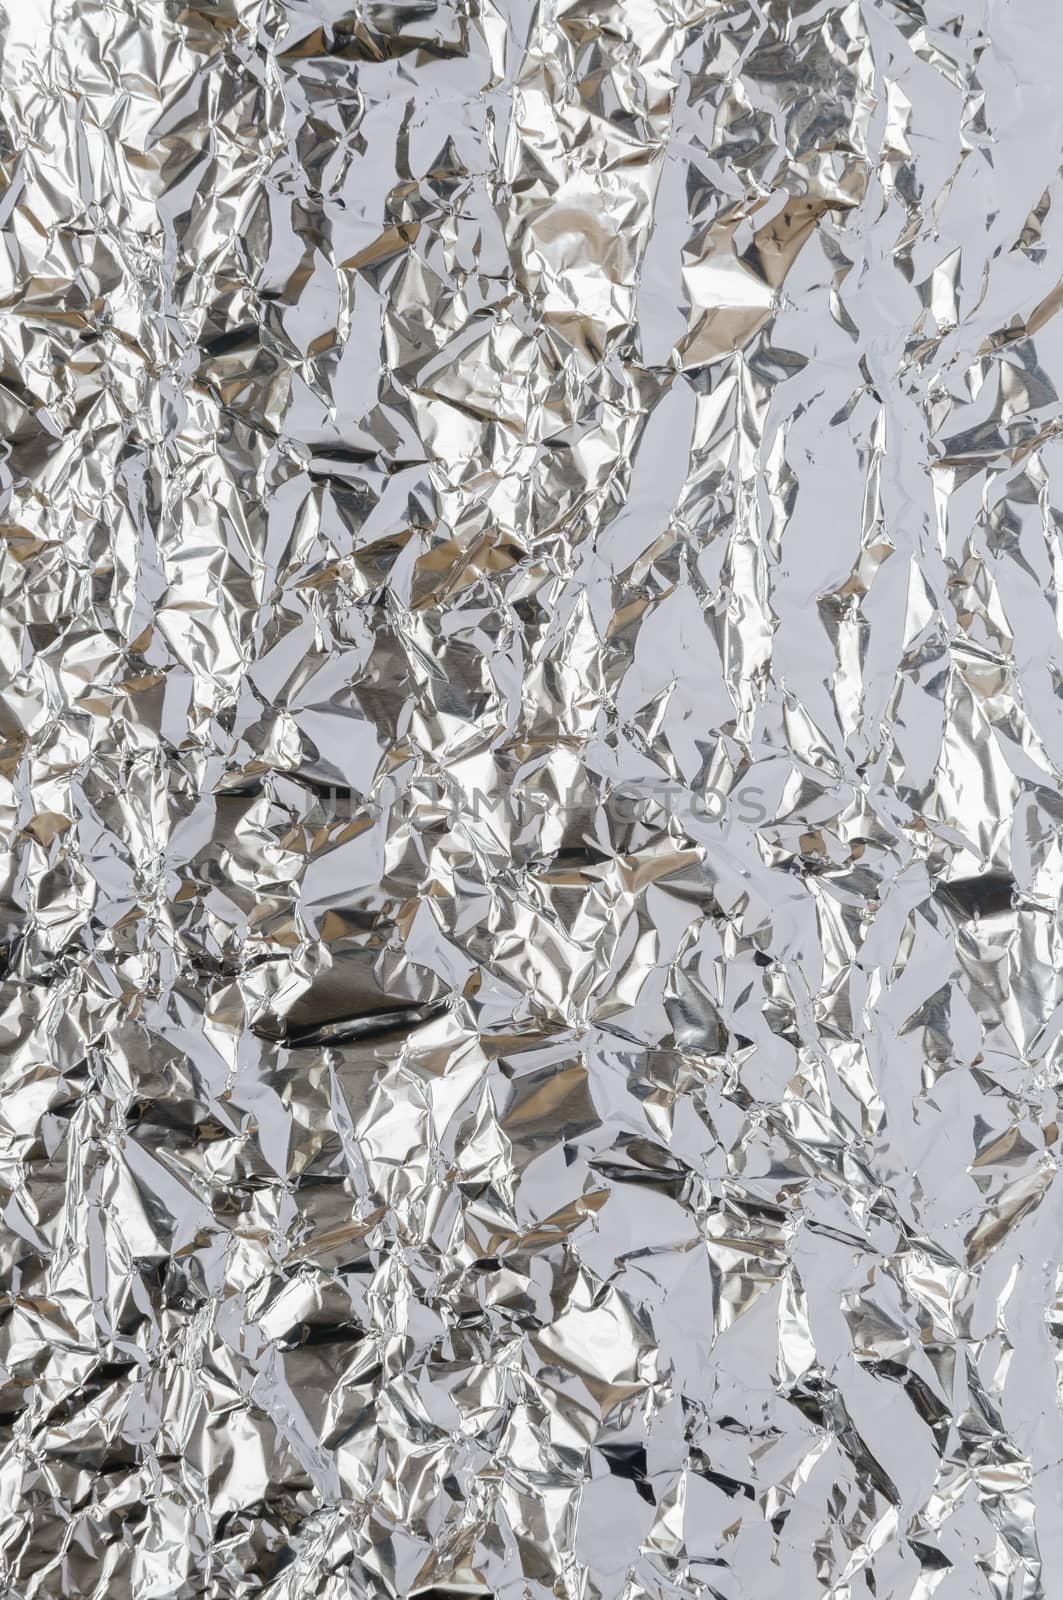 Crumpled Aluminum Foil by MaxalTamor